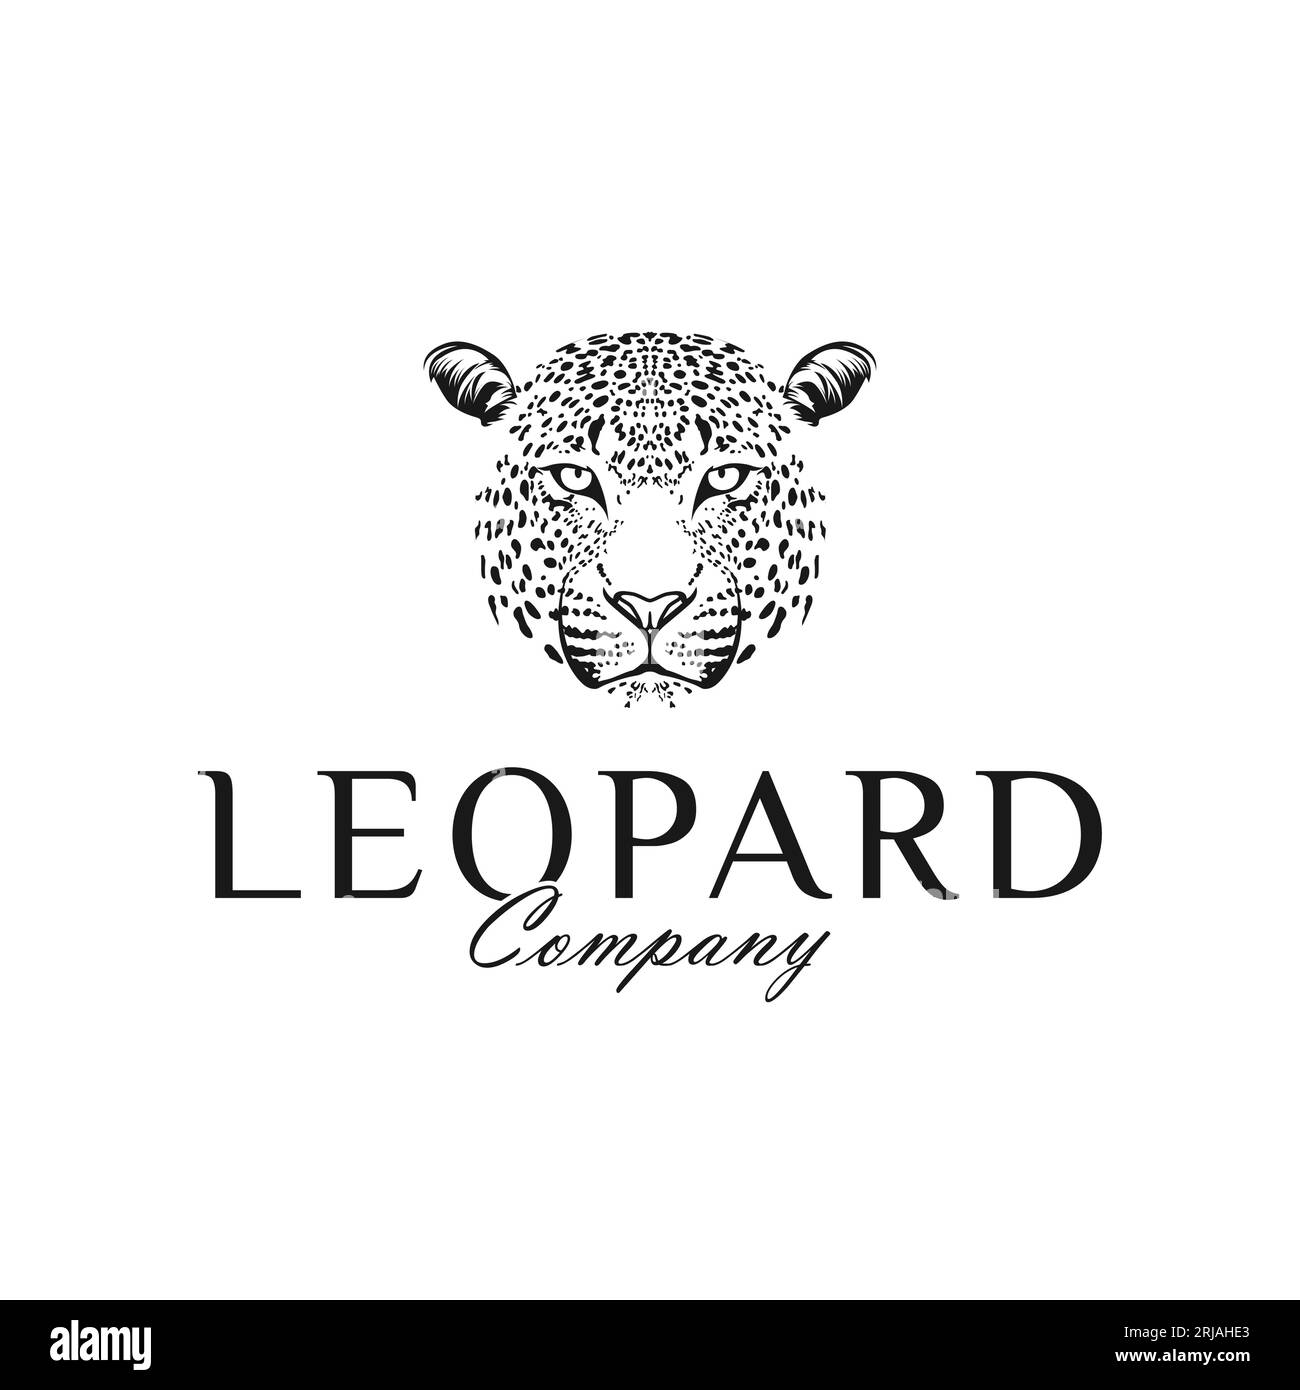 https://c8.alamy.com/comp/2RJAHE3/leopard-cheetah-face-logo-design-inspiration-2RJAHE3.jpg